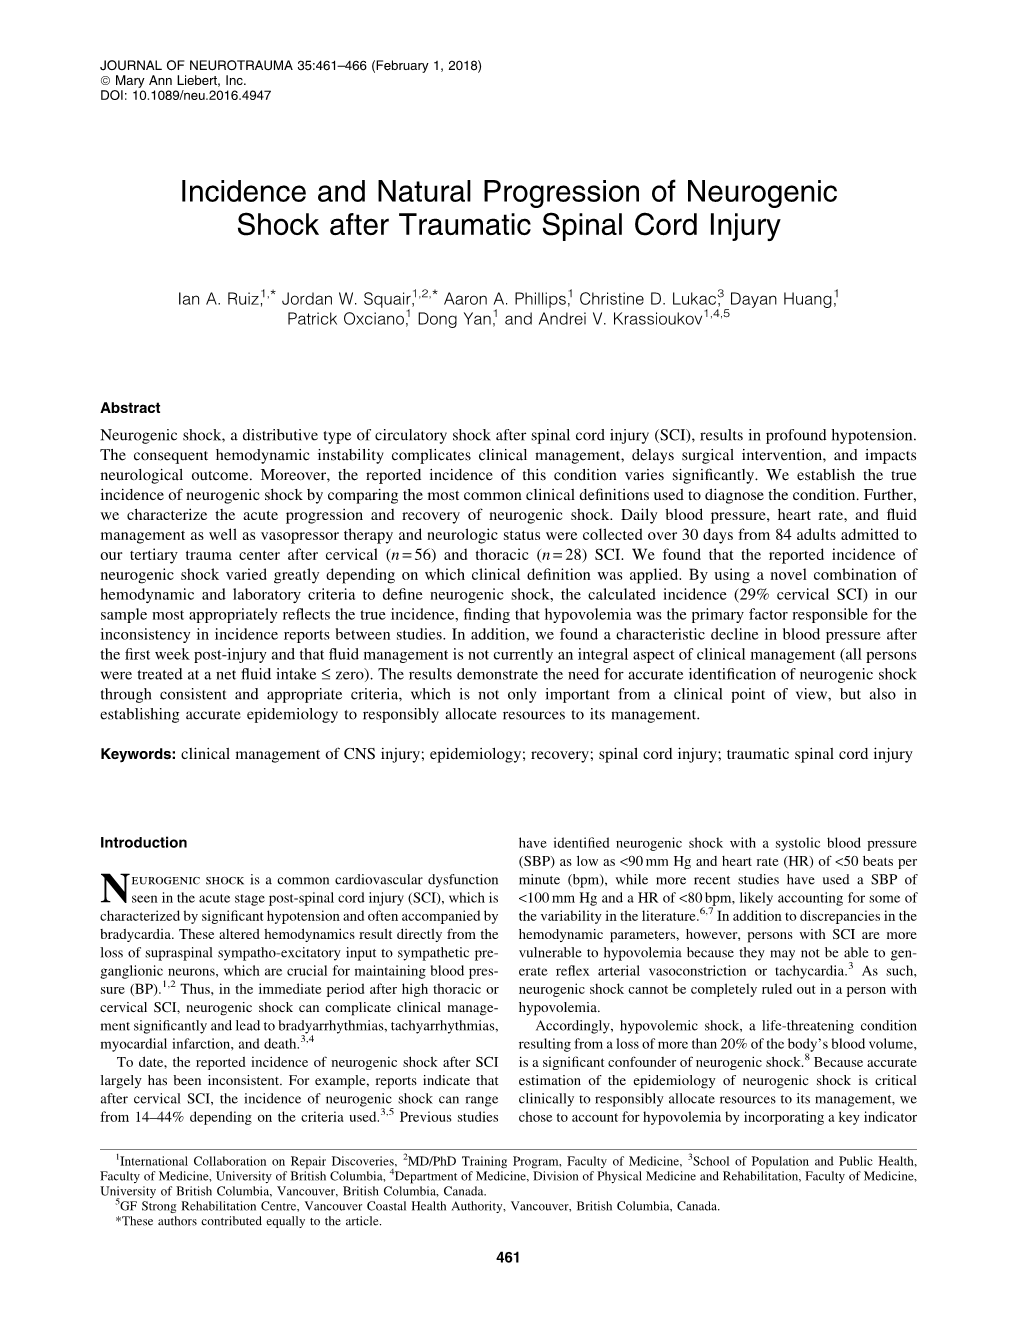 Descriptive Reporting of Neurogenic Shock